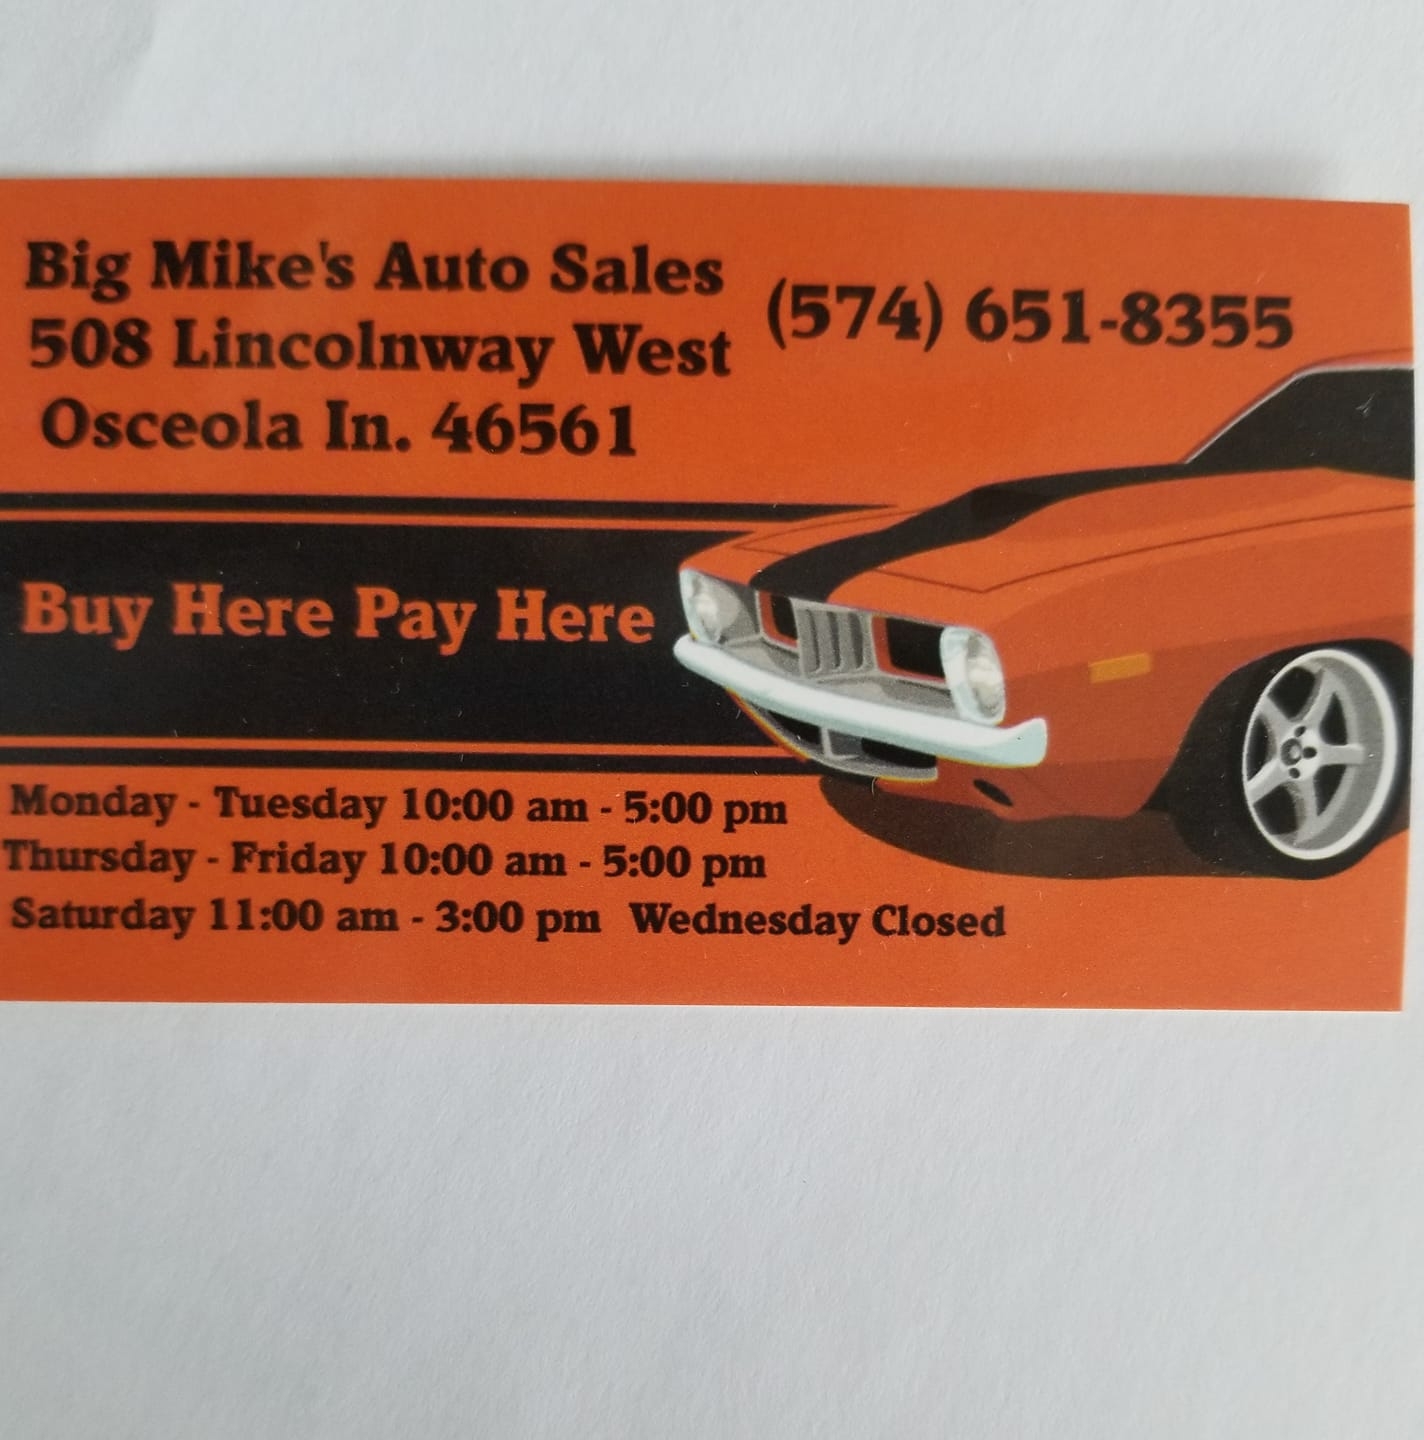 Big Mike's Auto Sales